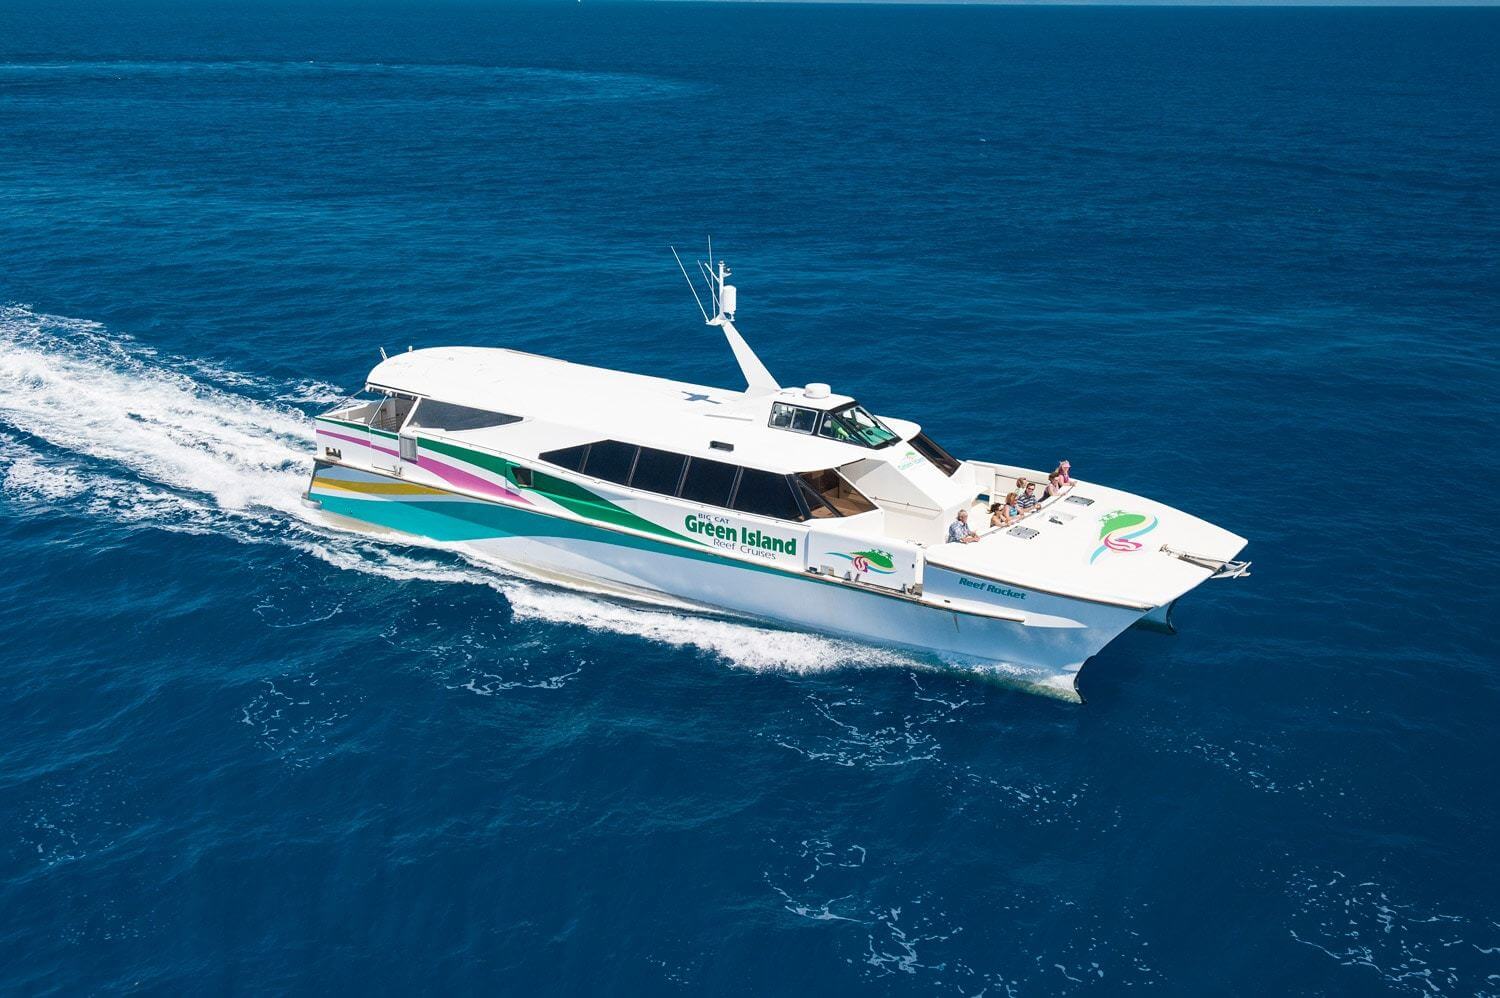 Big Cat Green Island Reef Cruises "Reef Rocket" Boats